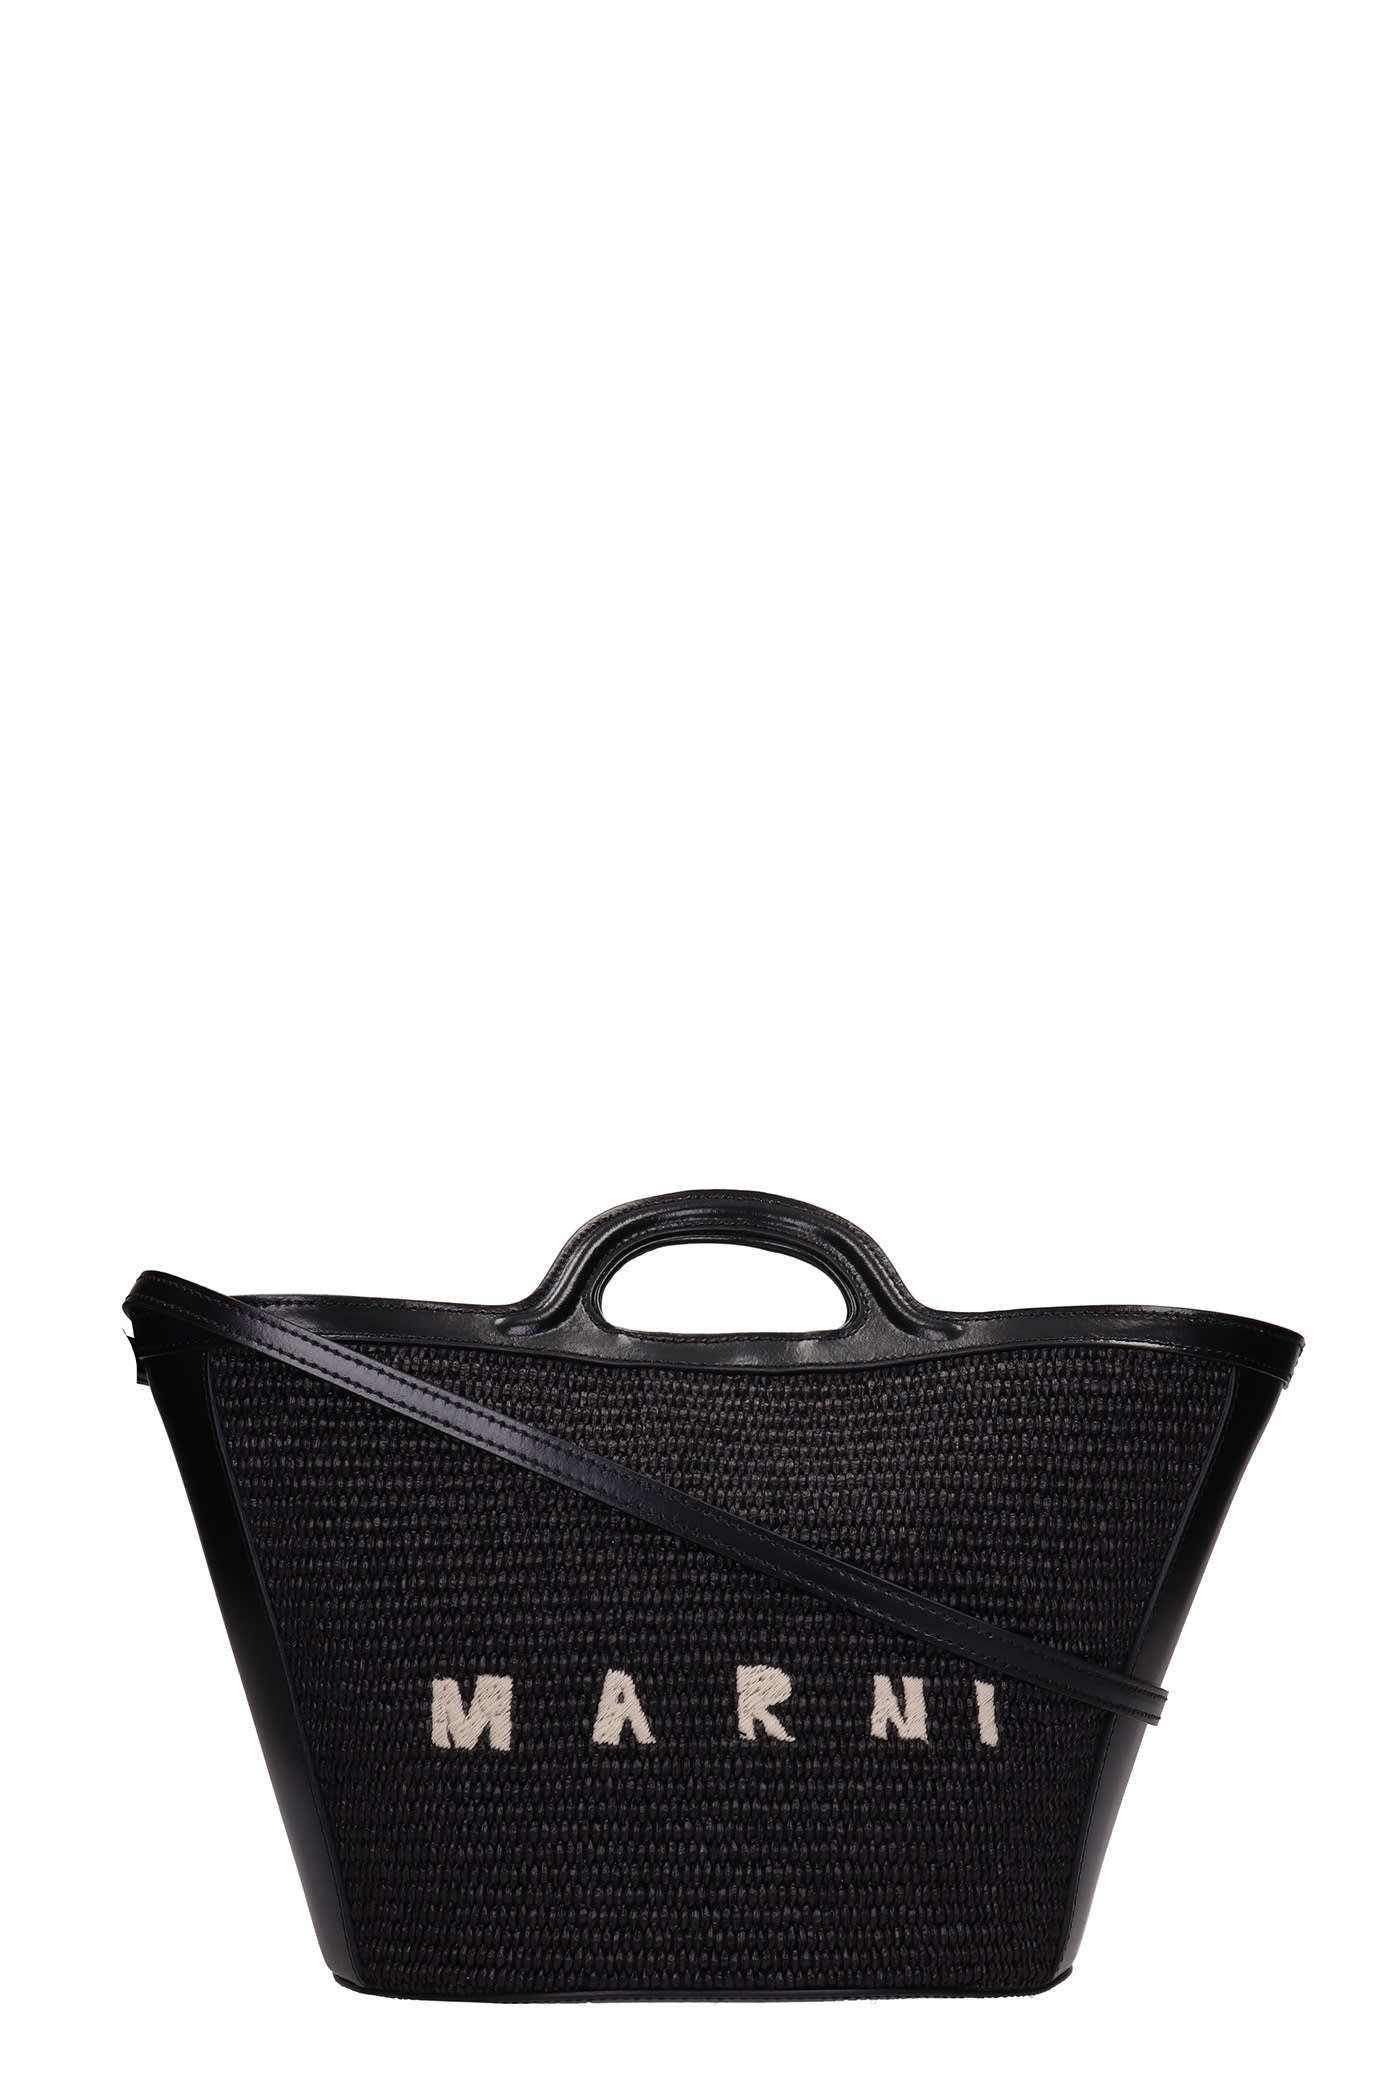 Marni Hand Bag In Black Silver